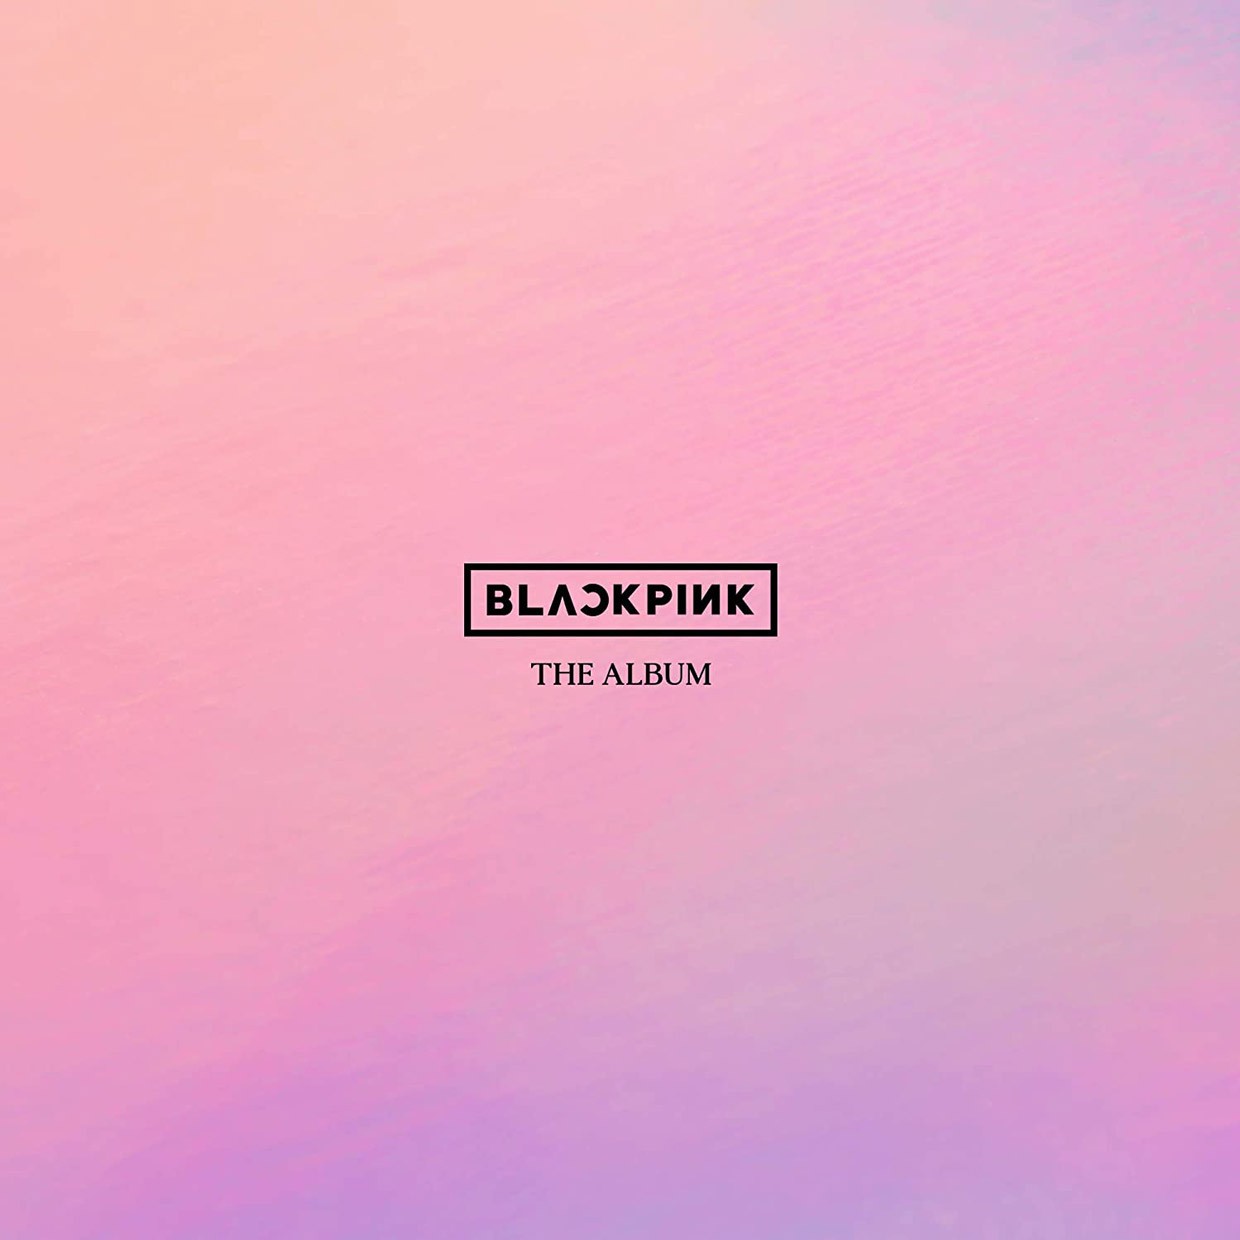 blackpink-the-album-ranked-25th-on-billboards-50-best-albums-of-2020-staff-picks